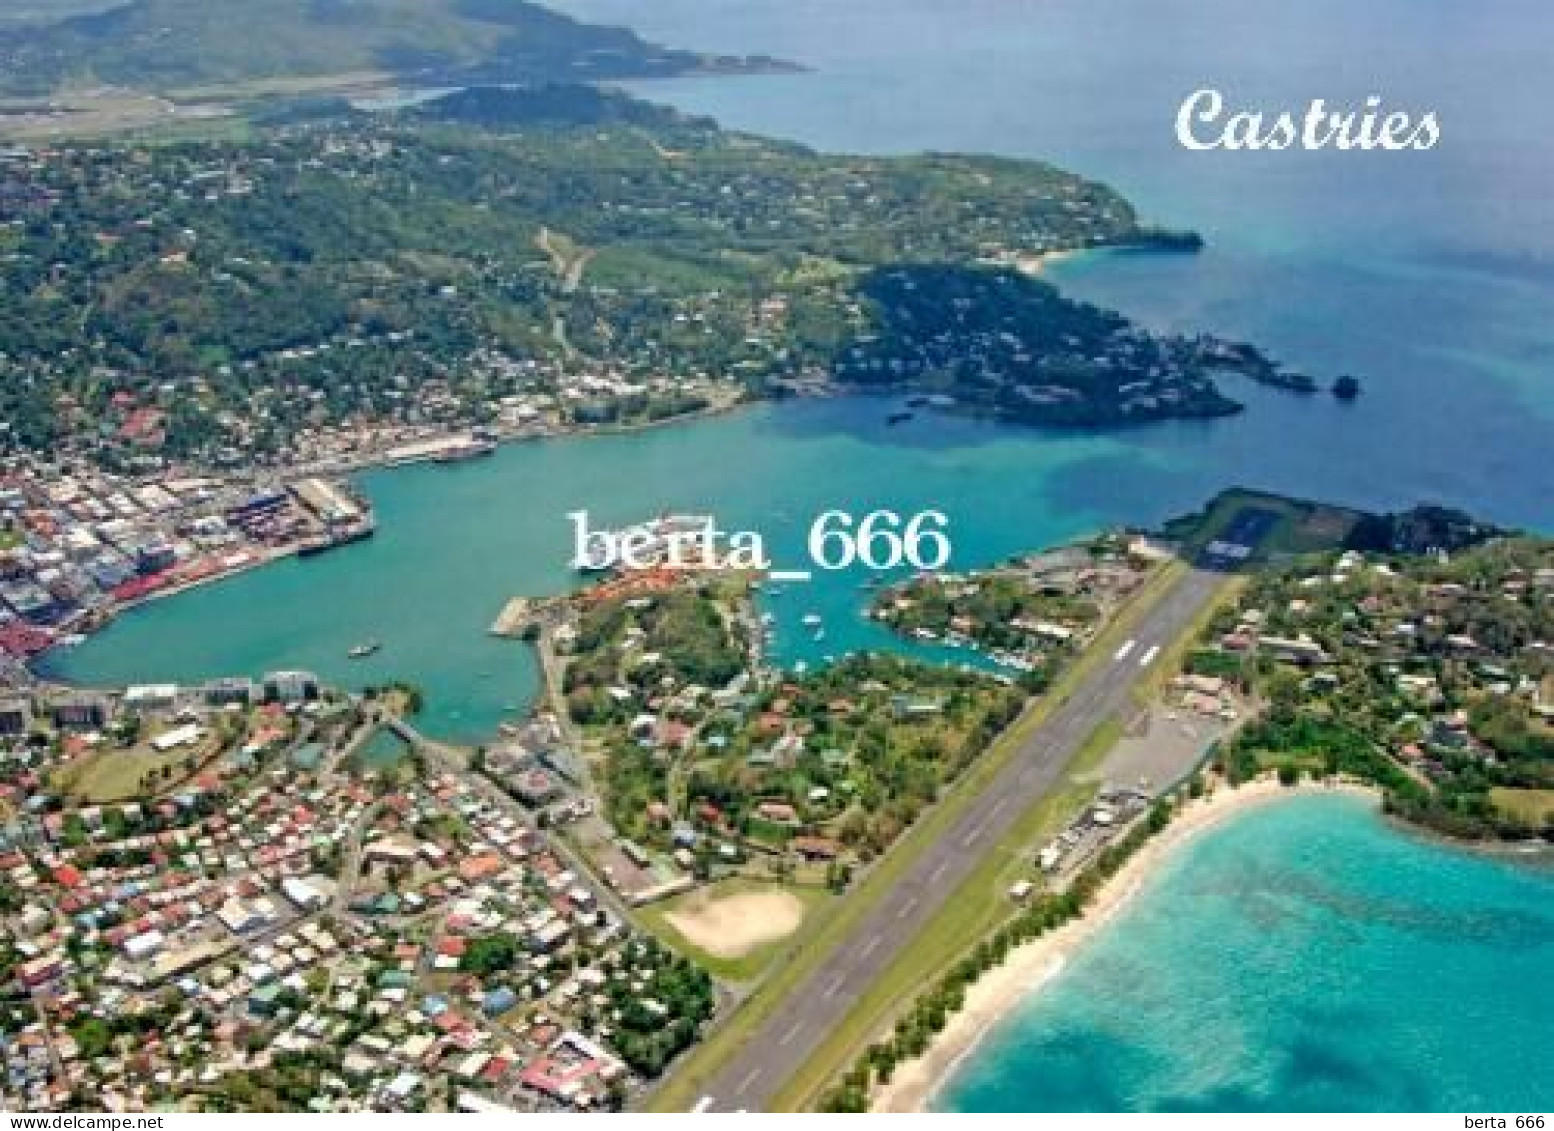 Saint Lucia Island Castries Aerial View Runway New Postcard - St. Lucia